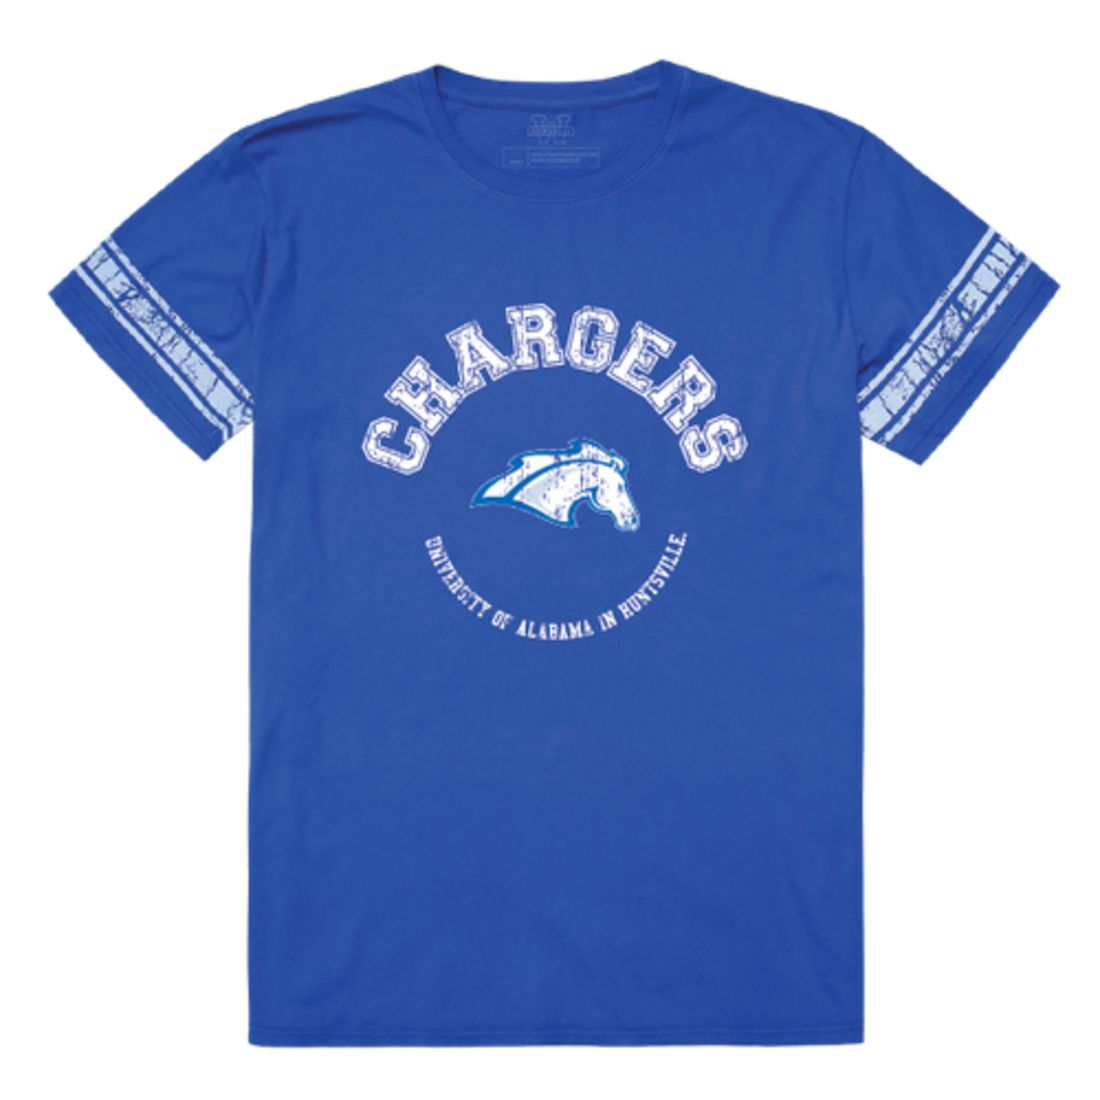 W Republic Apparel The University of Alabama in Huntsville Chargers Football T-Shirt Tee, Medium